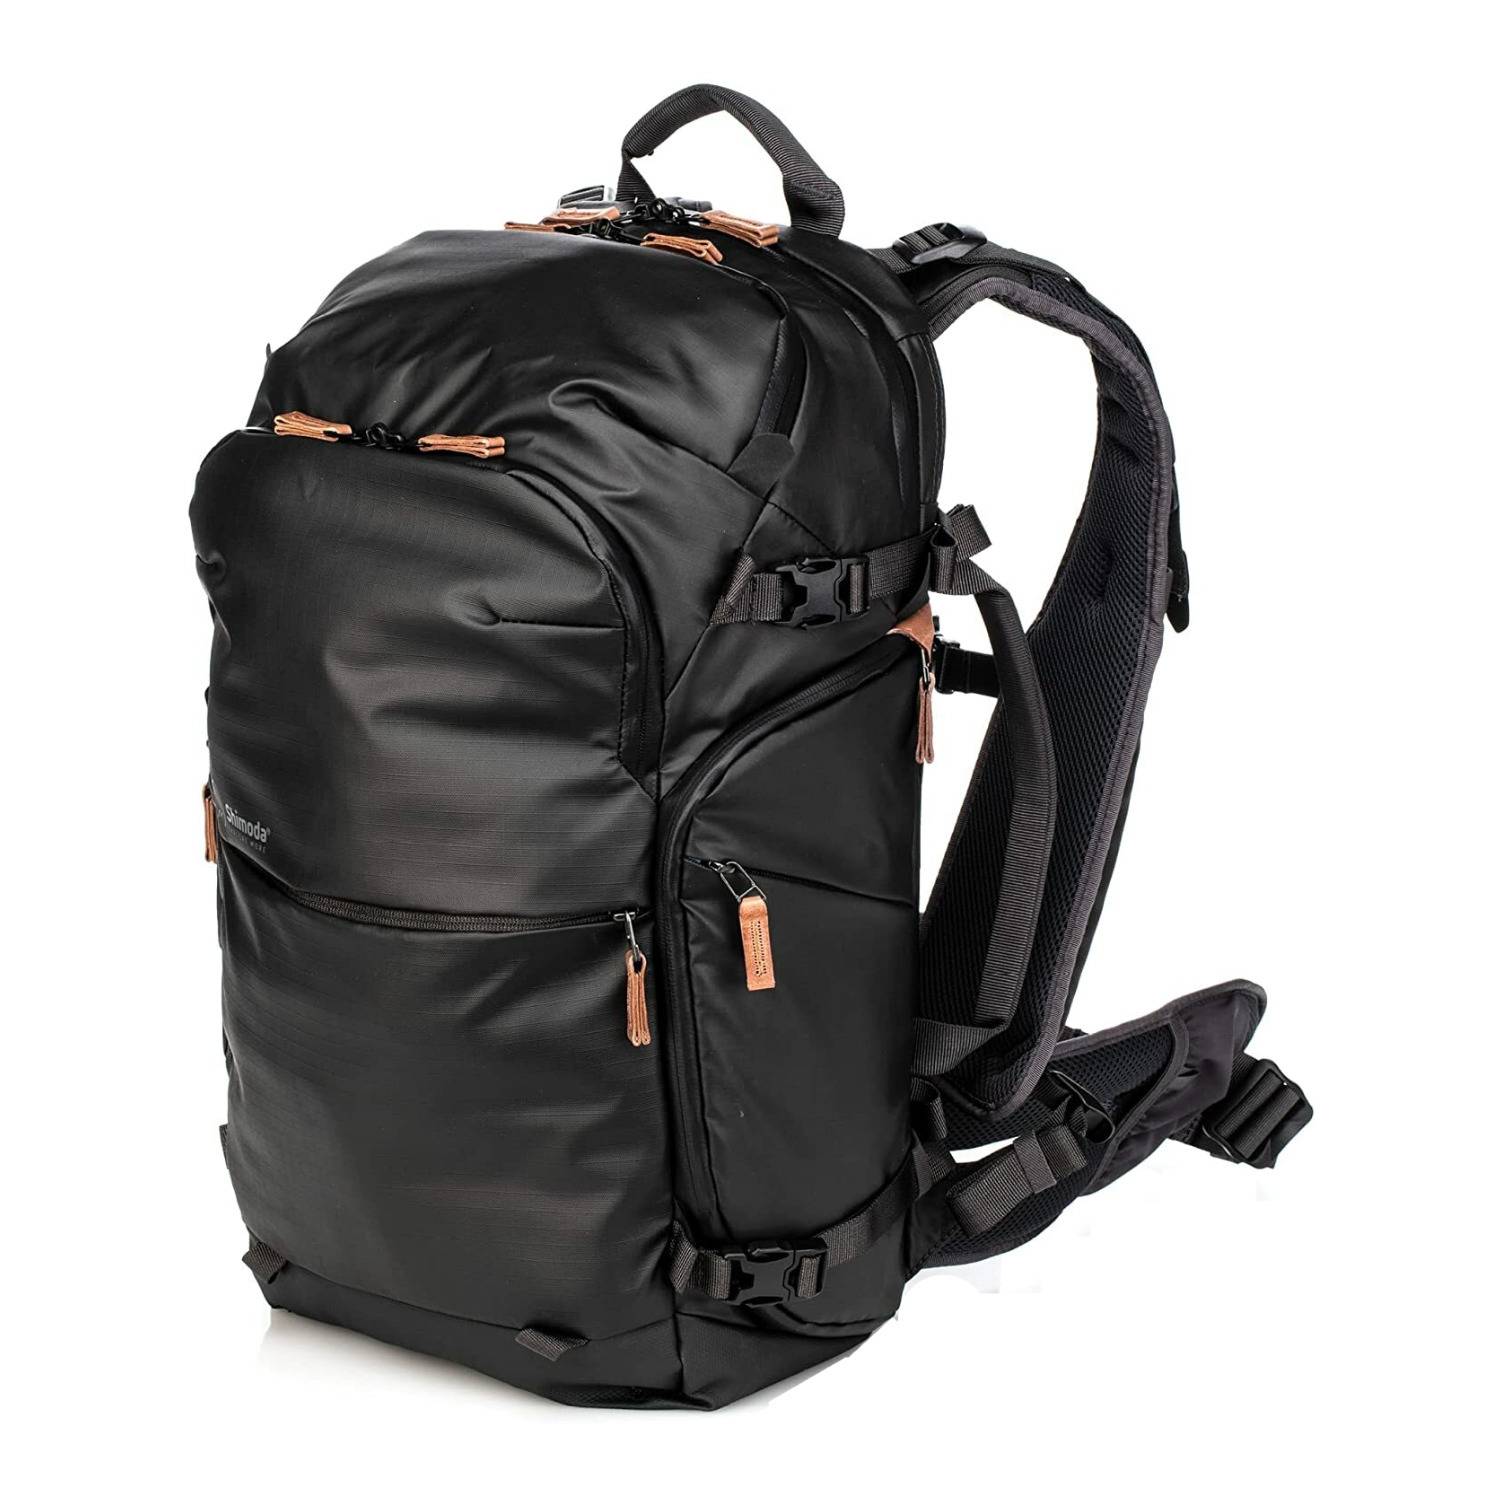 Shimoda Explore v2 30 Backpack Photo Starter Kit (Black)